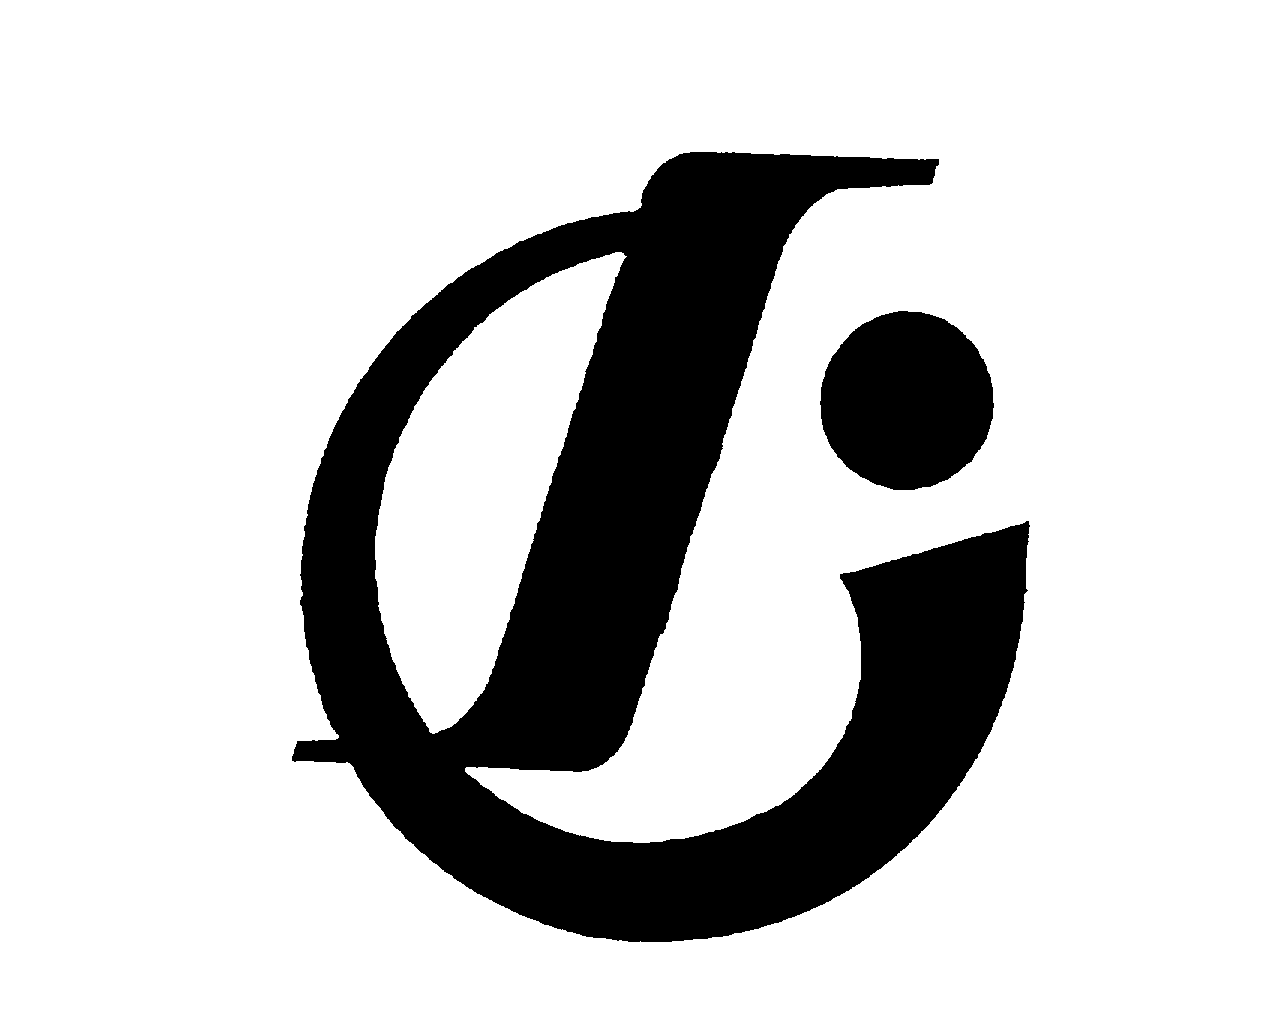 Trademark Logo JIFA